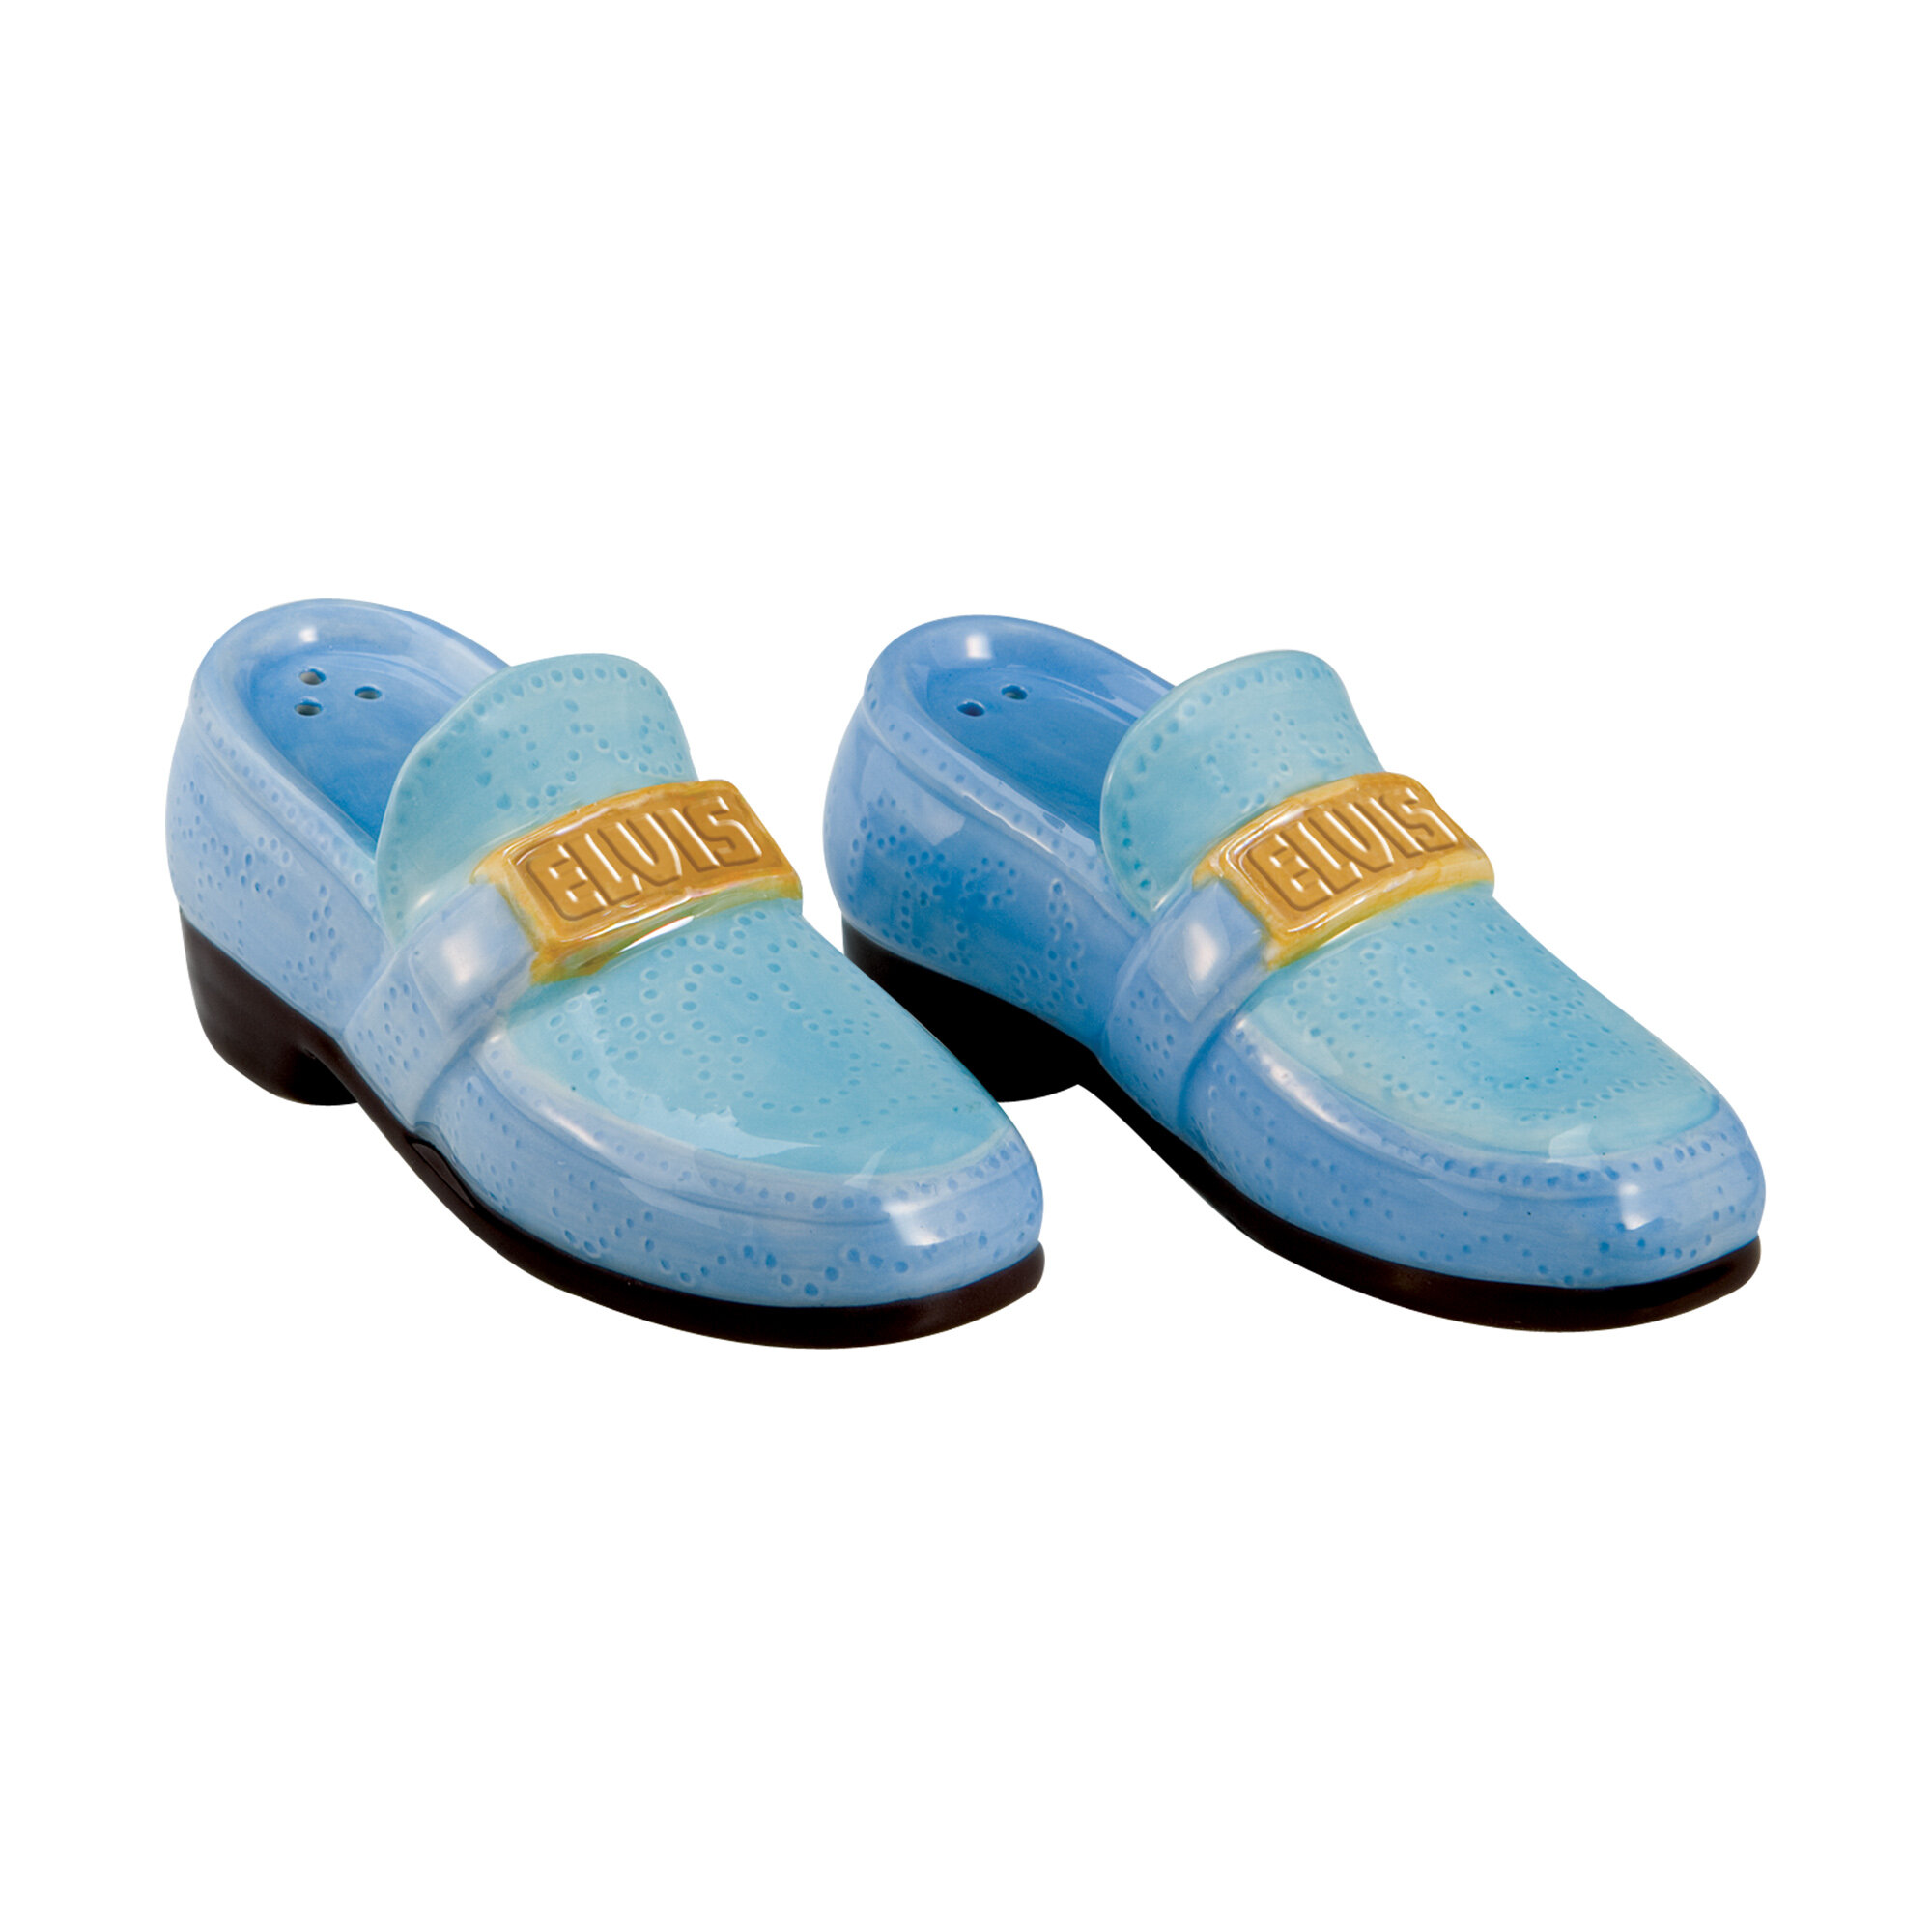 elvis blue suede shoes for sale